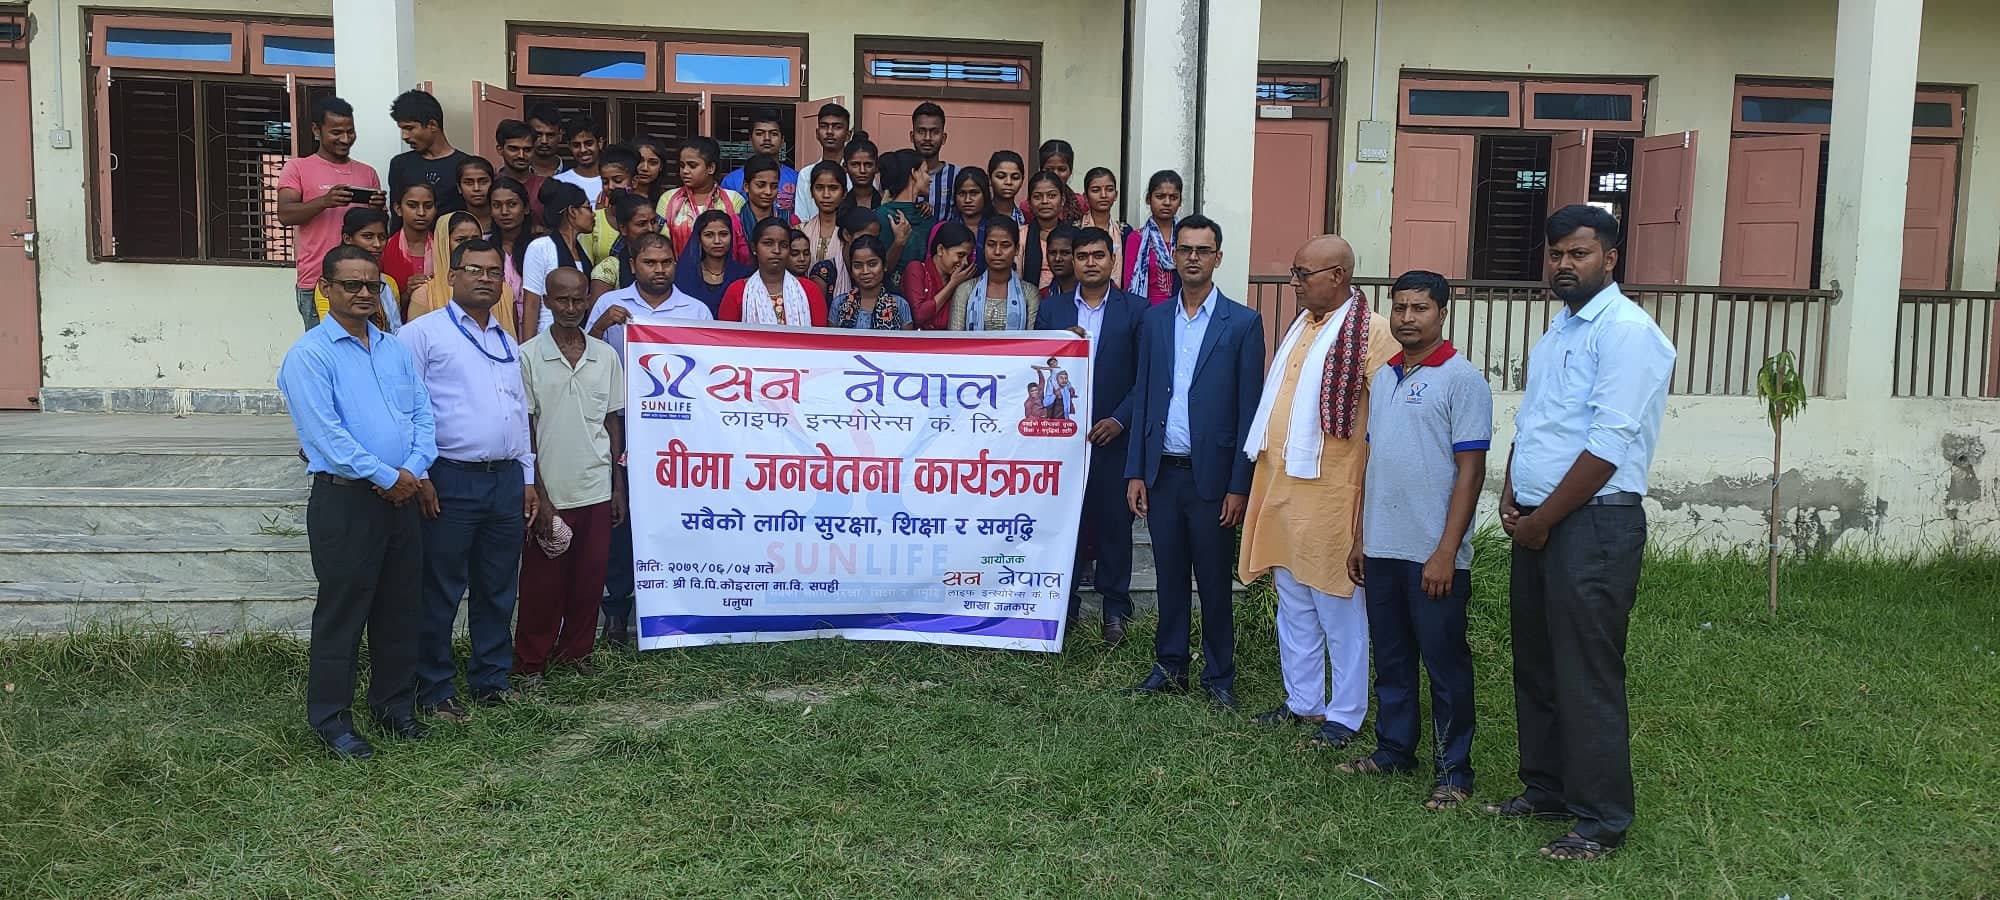 सामाजिक उत्तरदायित्वको कार्यक्रम गरी मनायो सन नेपाल लाइफले पाँचौं बार्षिकोउत्सव